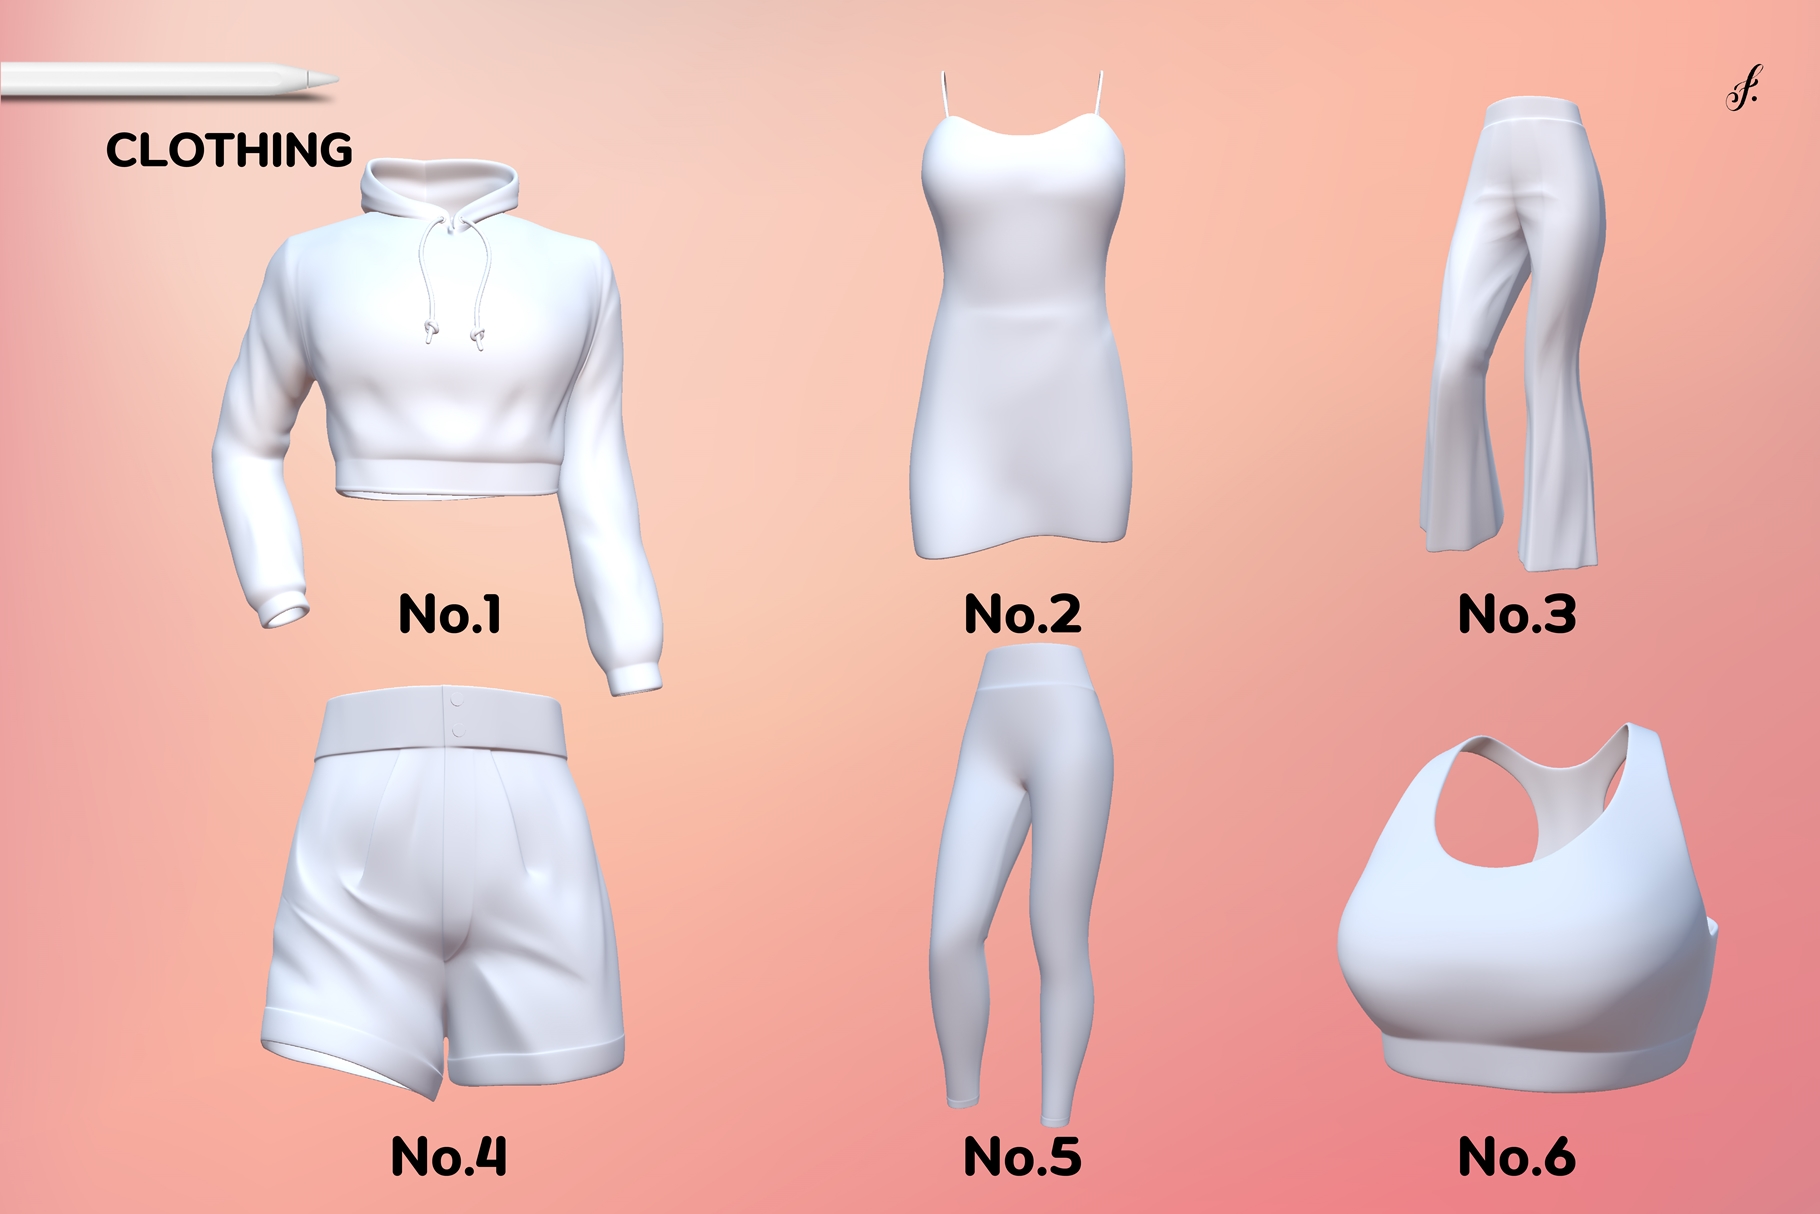 Procreate 3D Model Clothing  10 Men Clothes & Accessories - Design Cuts